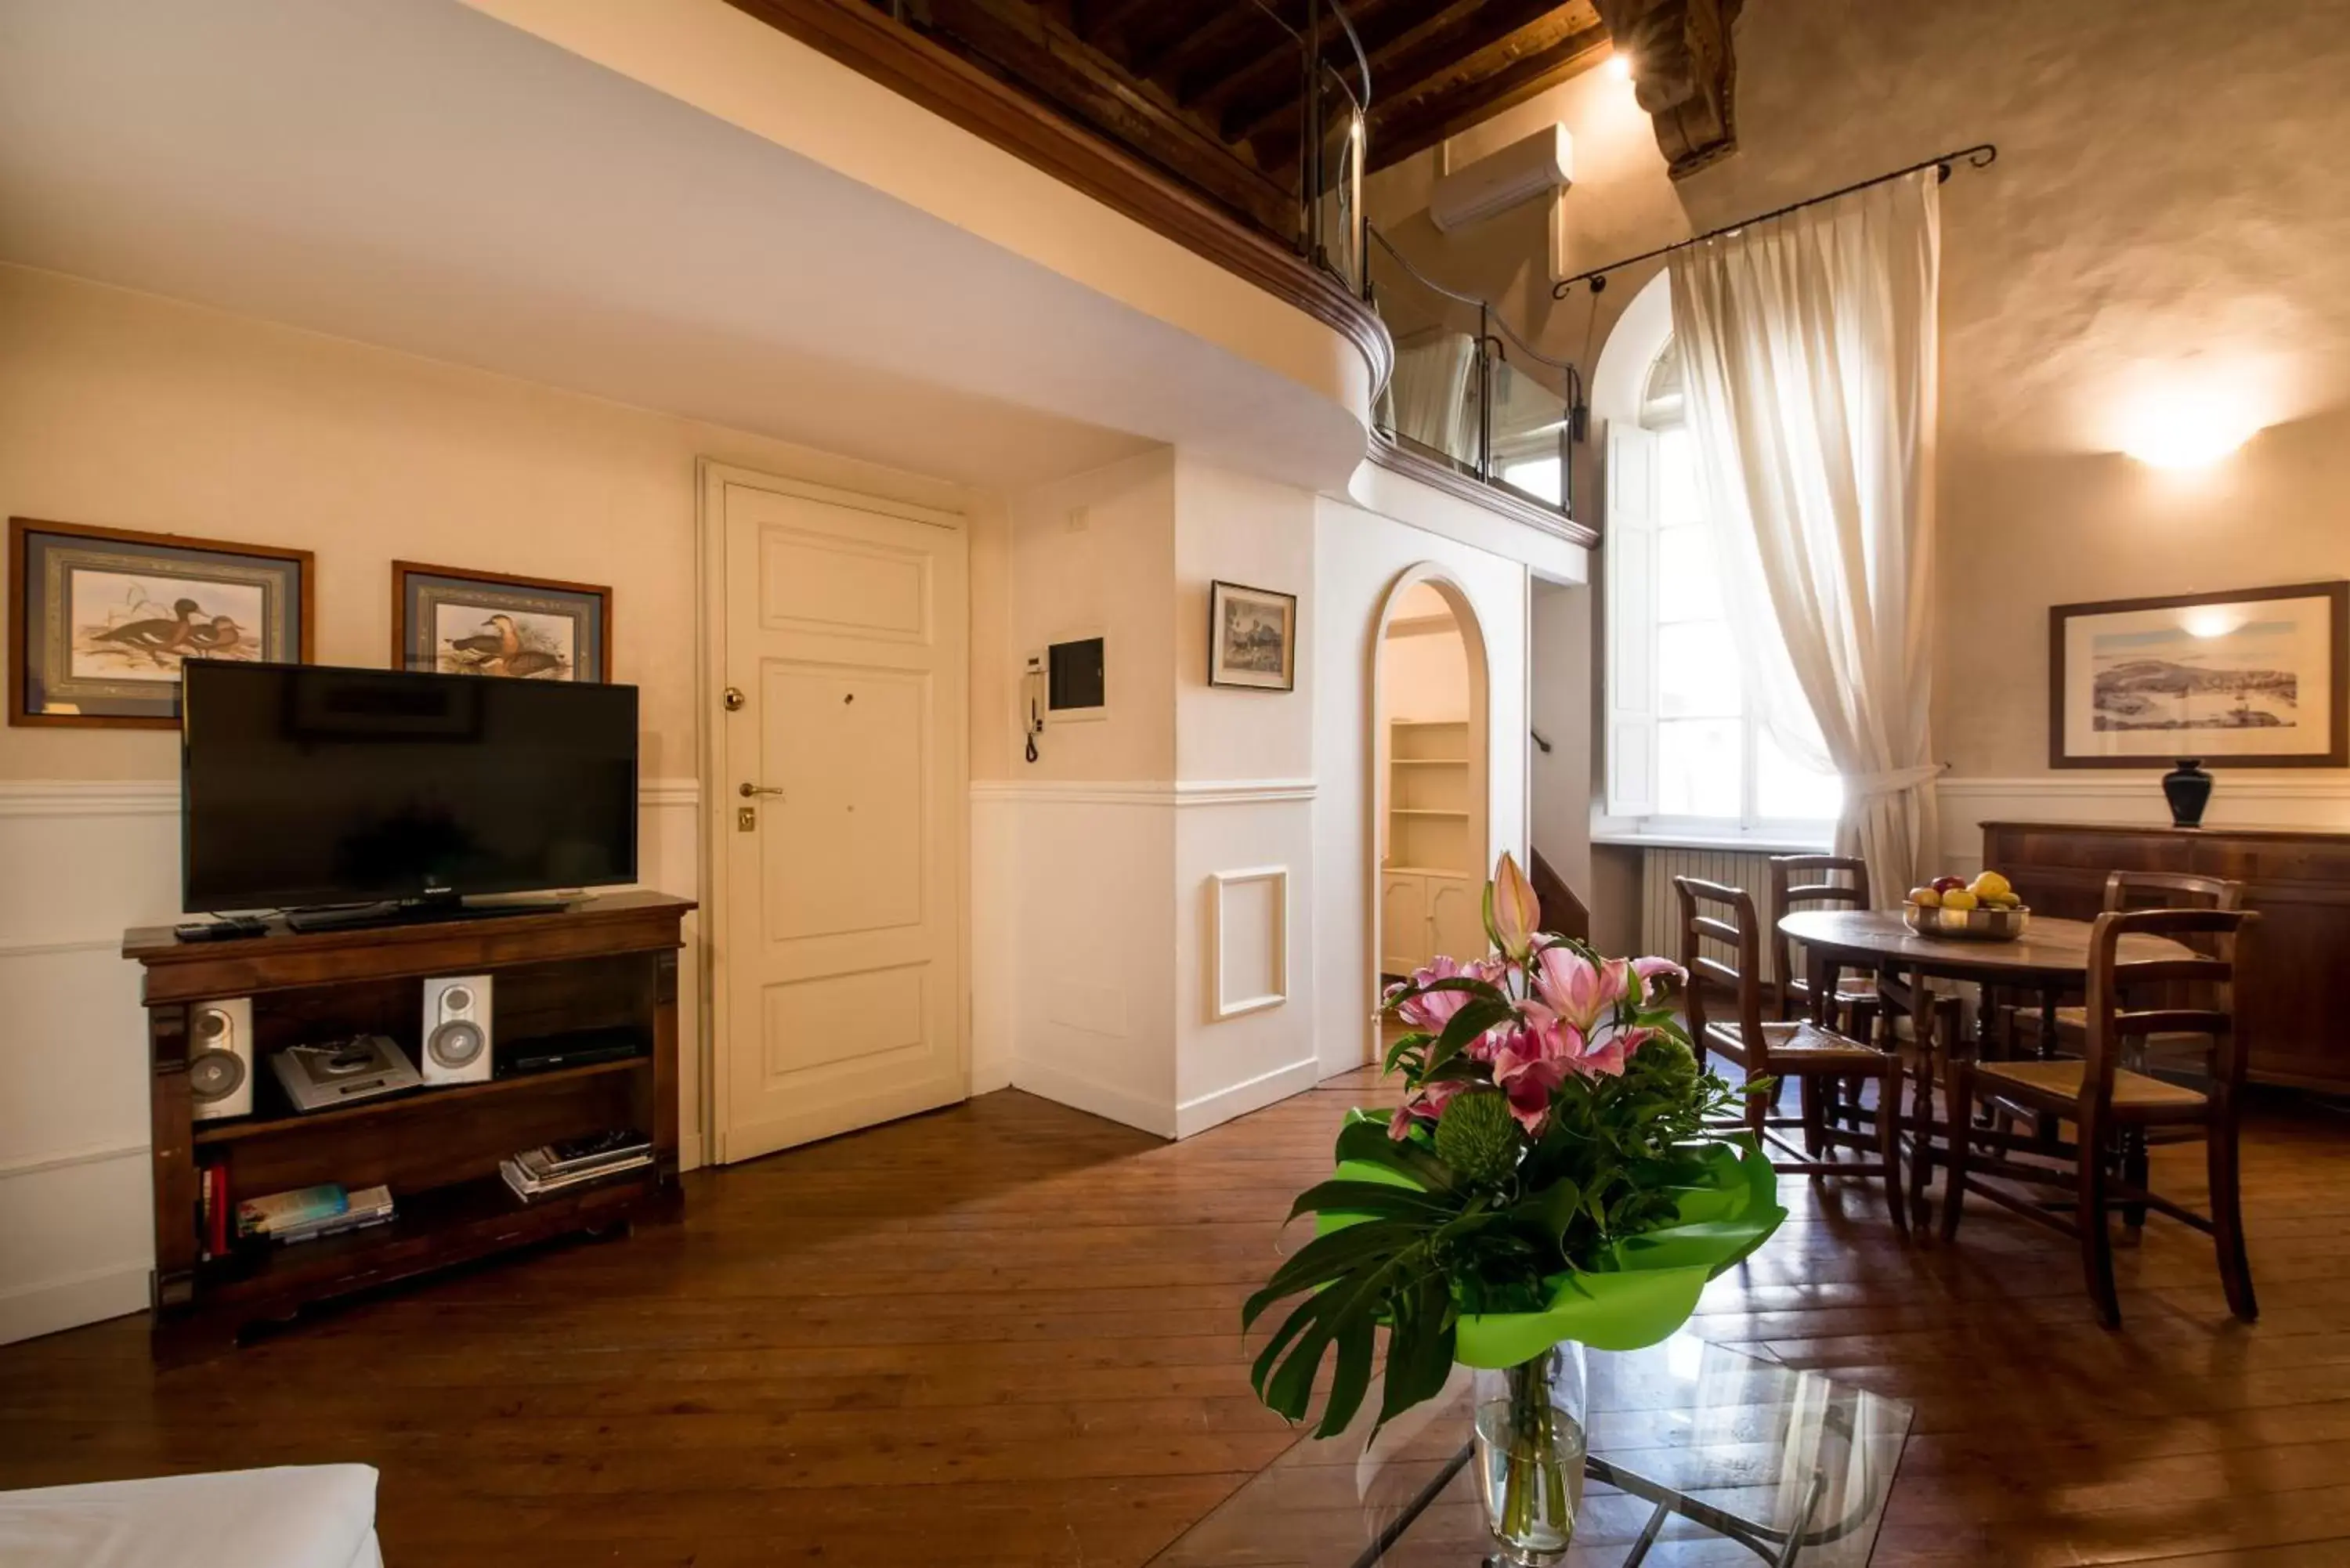 Apartment - Split Level in Palazzo Salviati by Varental